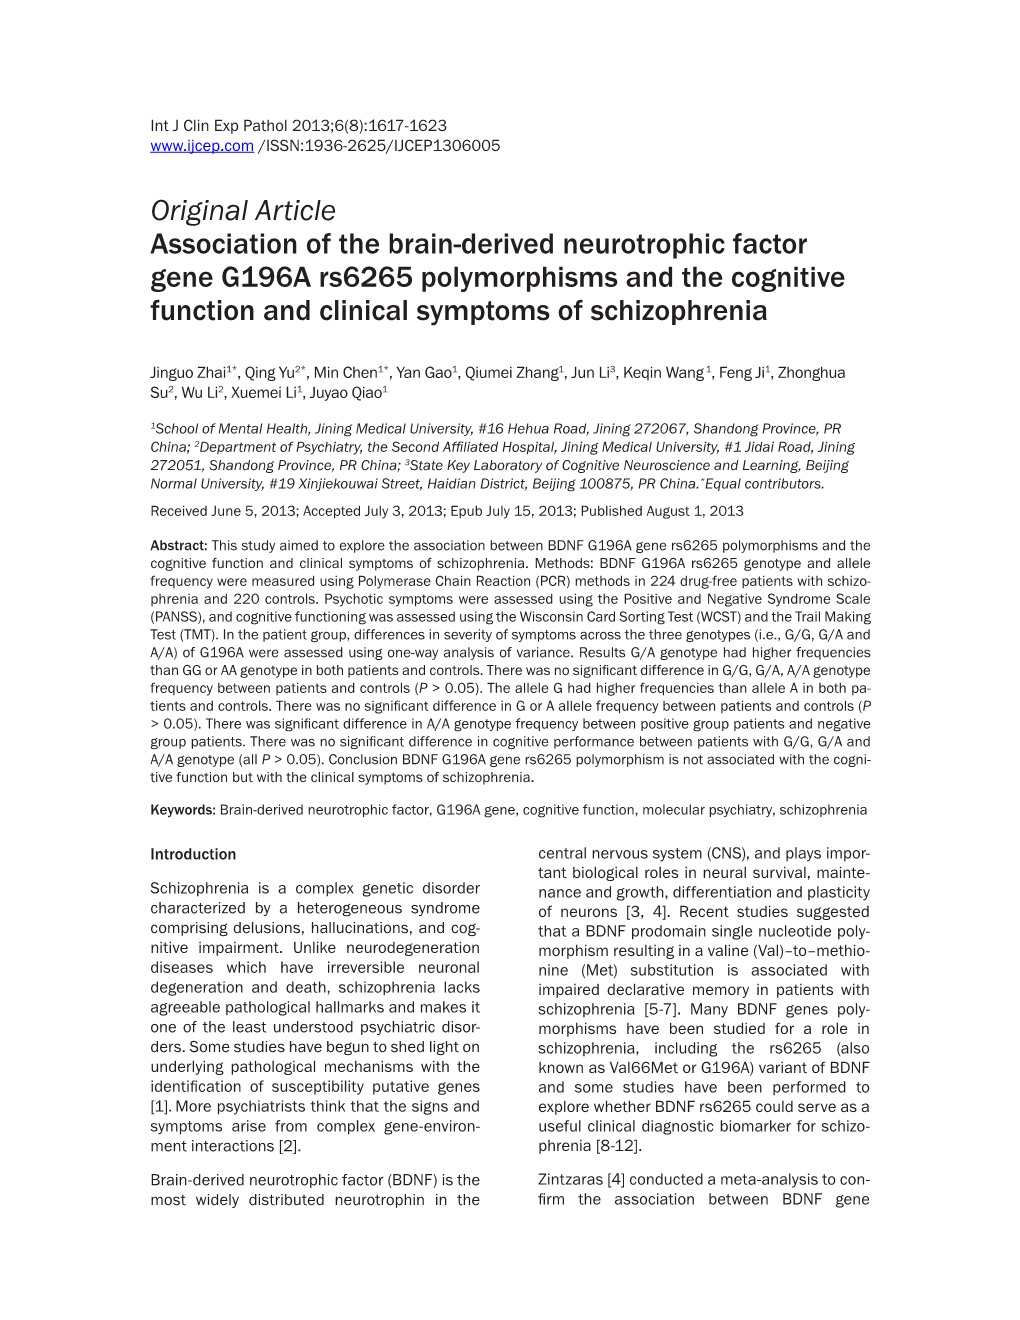 Original Article Association of the Brain-Derived Neurotrophic Factor